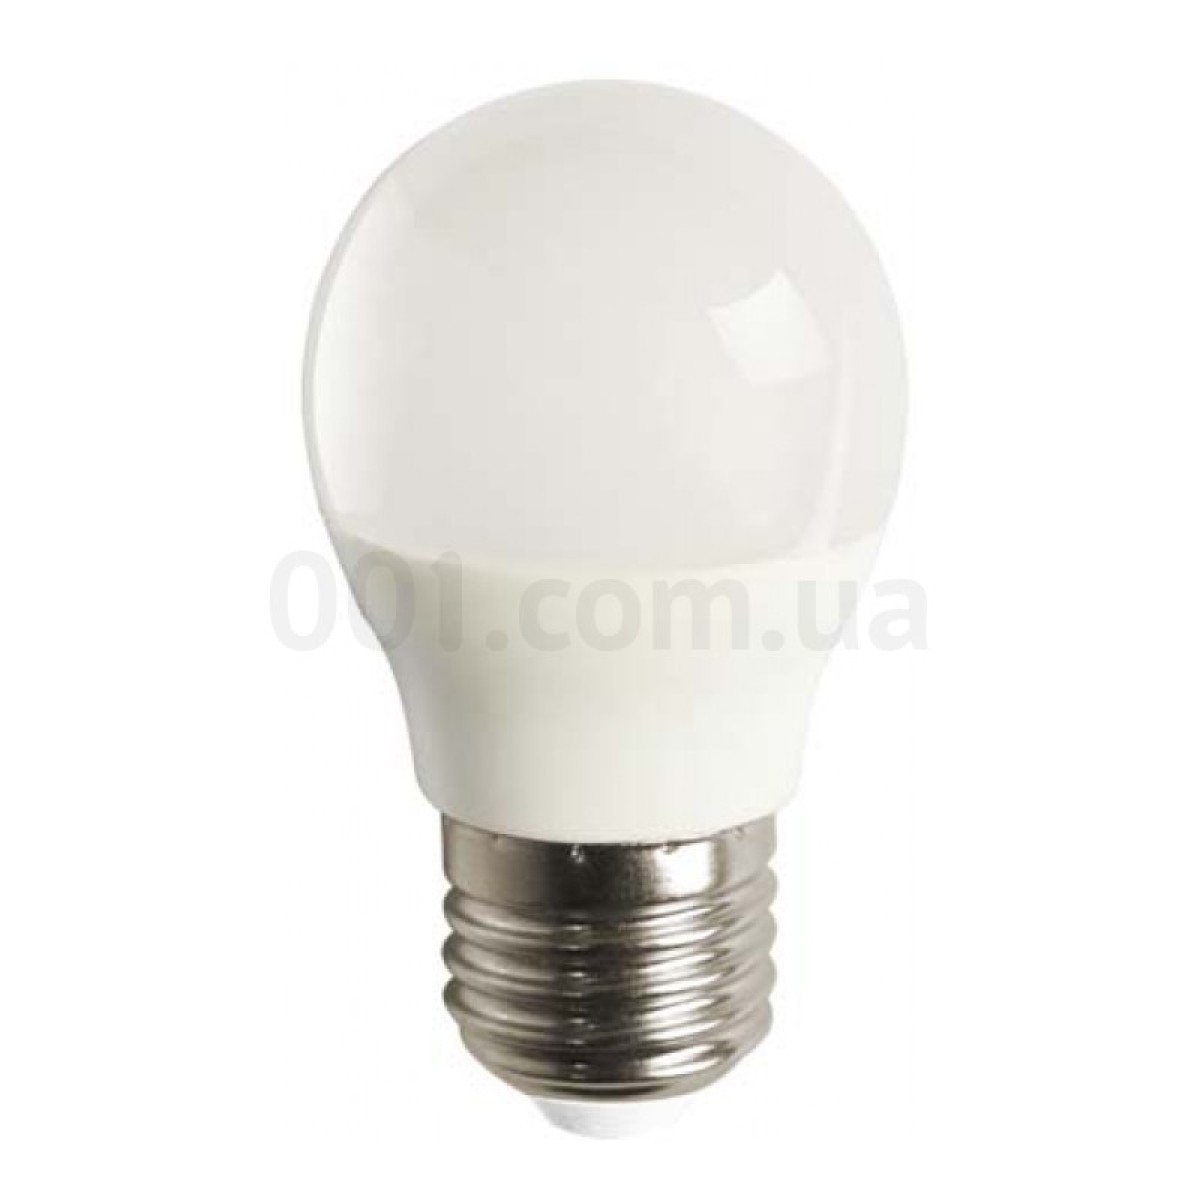 Светодиодная лампа LB-380 G45 (шар) 4Вт 2700K E27, Feron 98_98.jpg